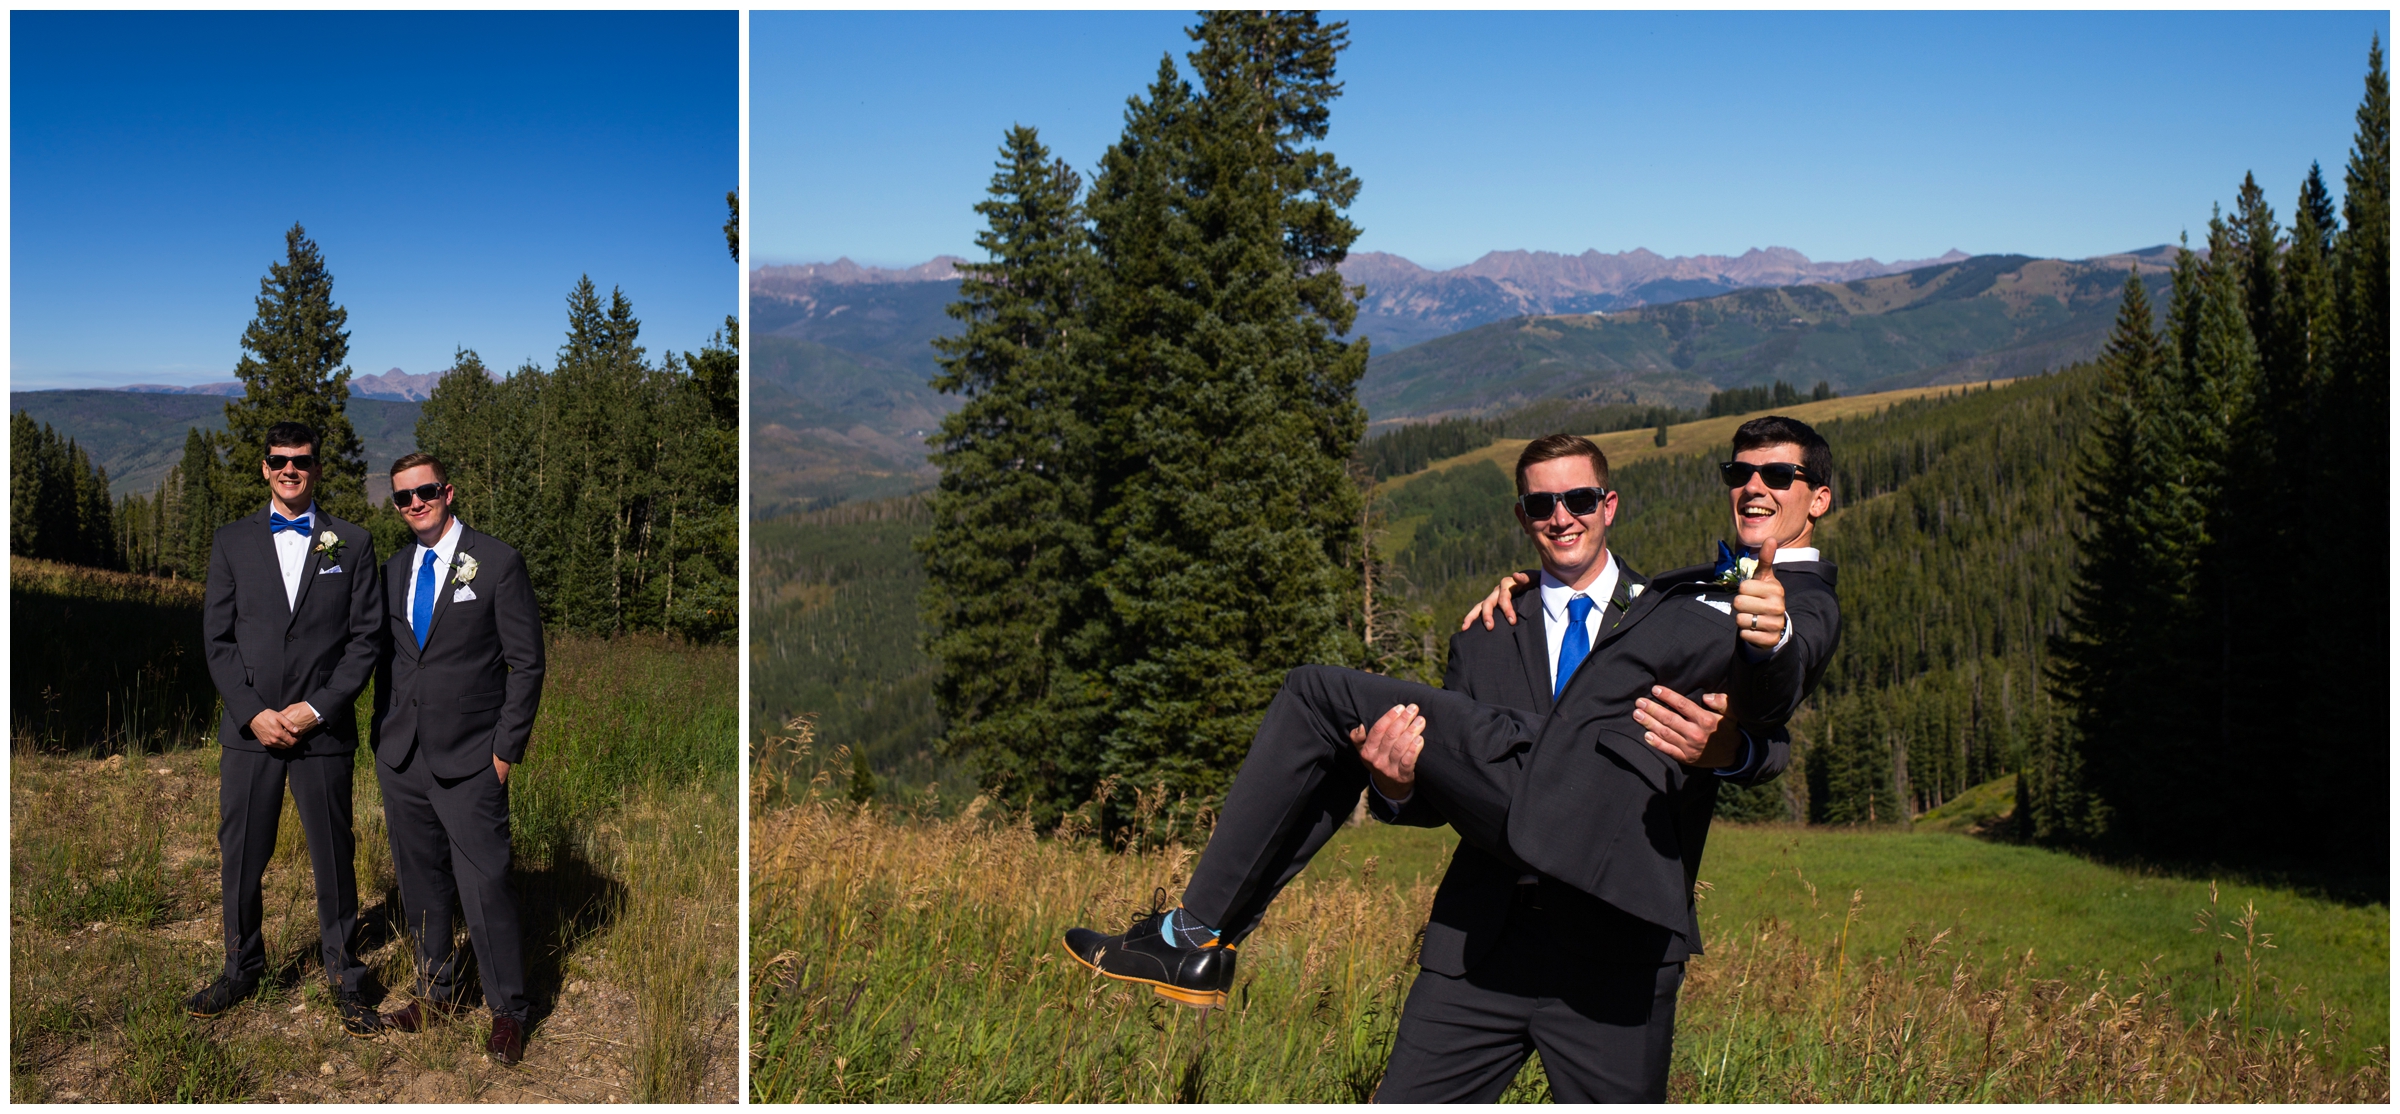 groomsmen holding groom at Colorado ski resort wedding